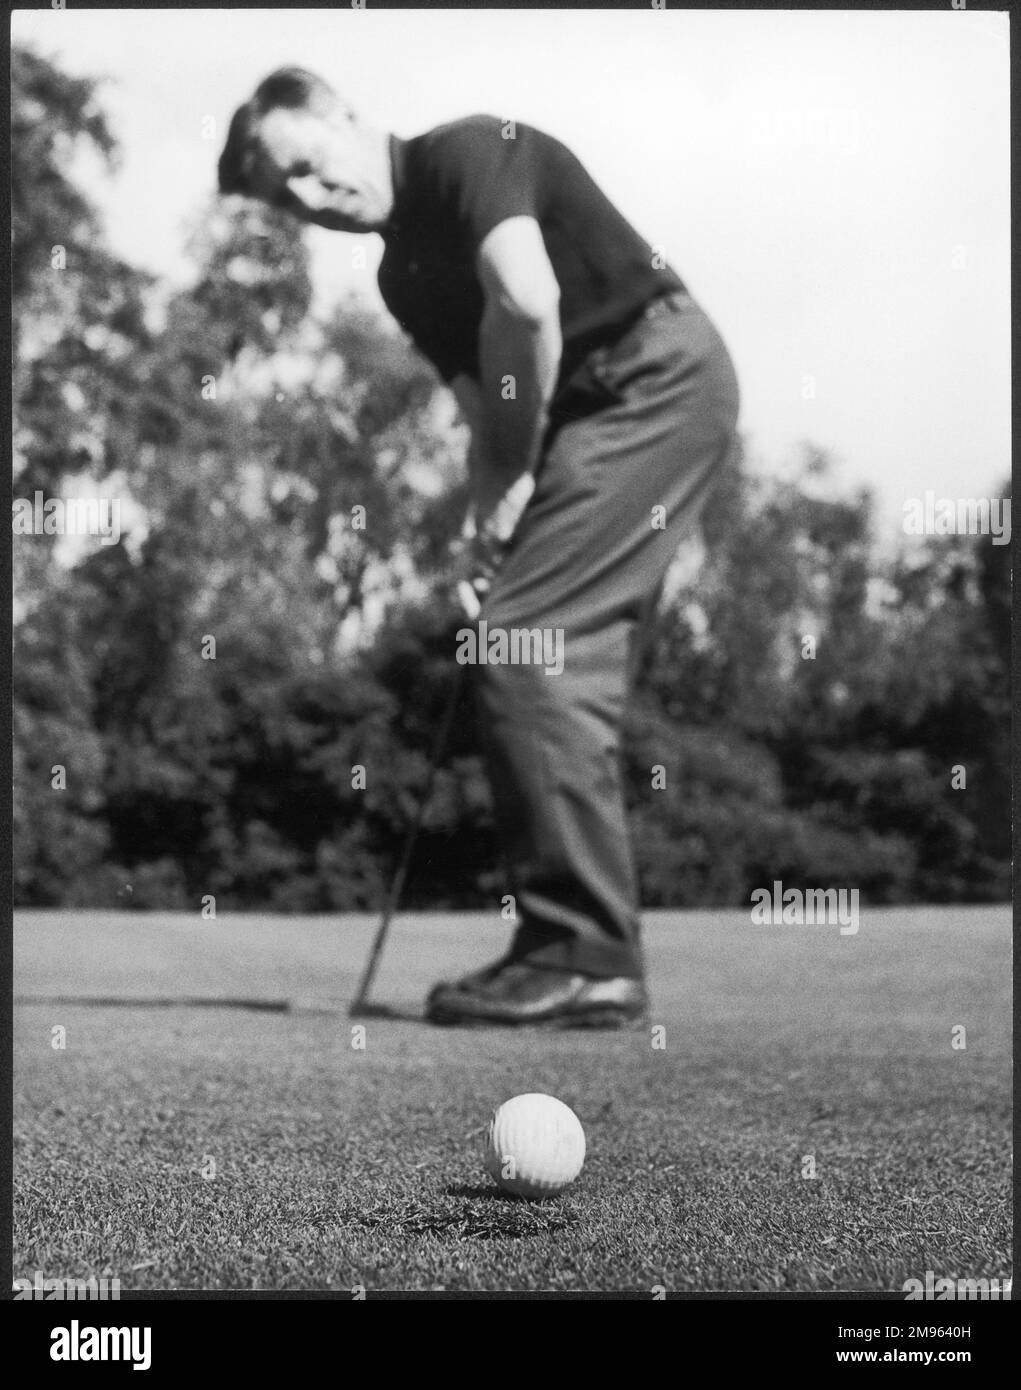 A golfer prepares to putt Stock Photo